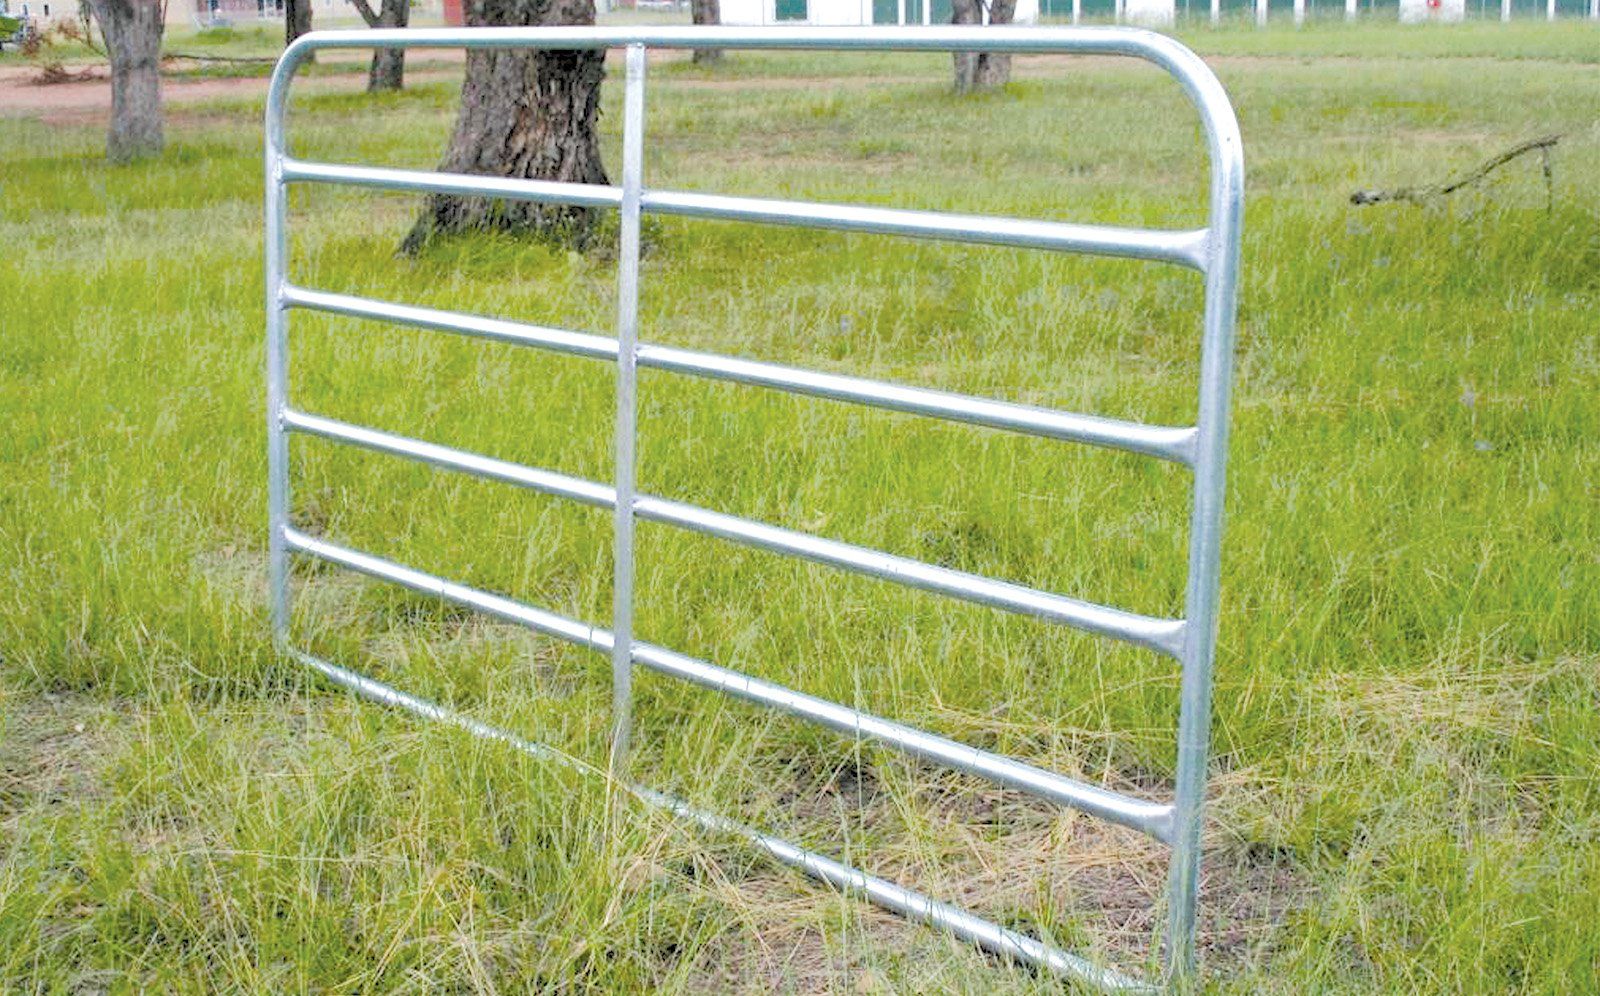 6 bar cattle gate